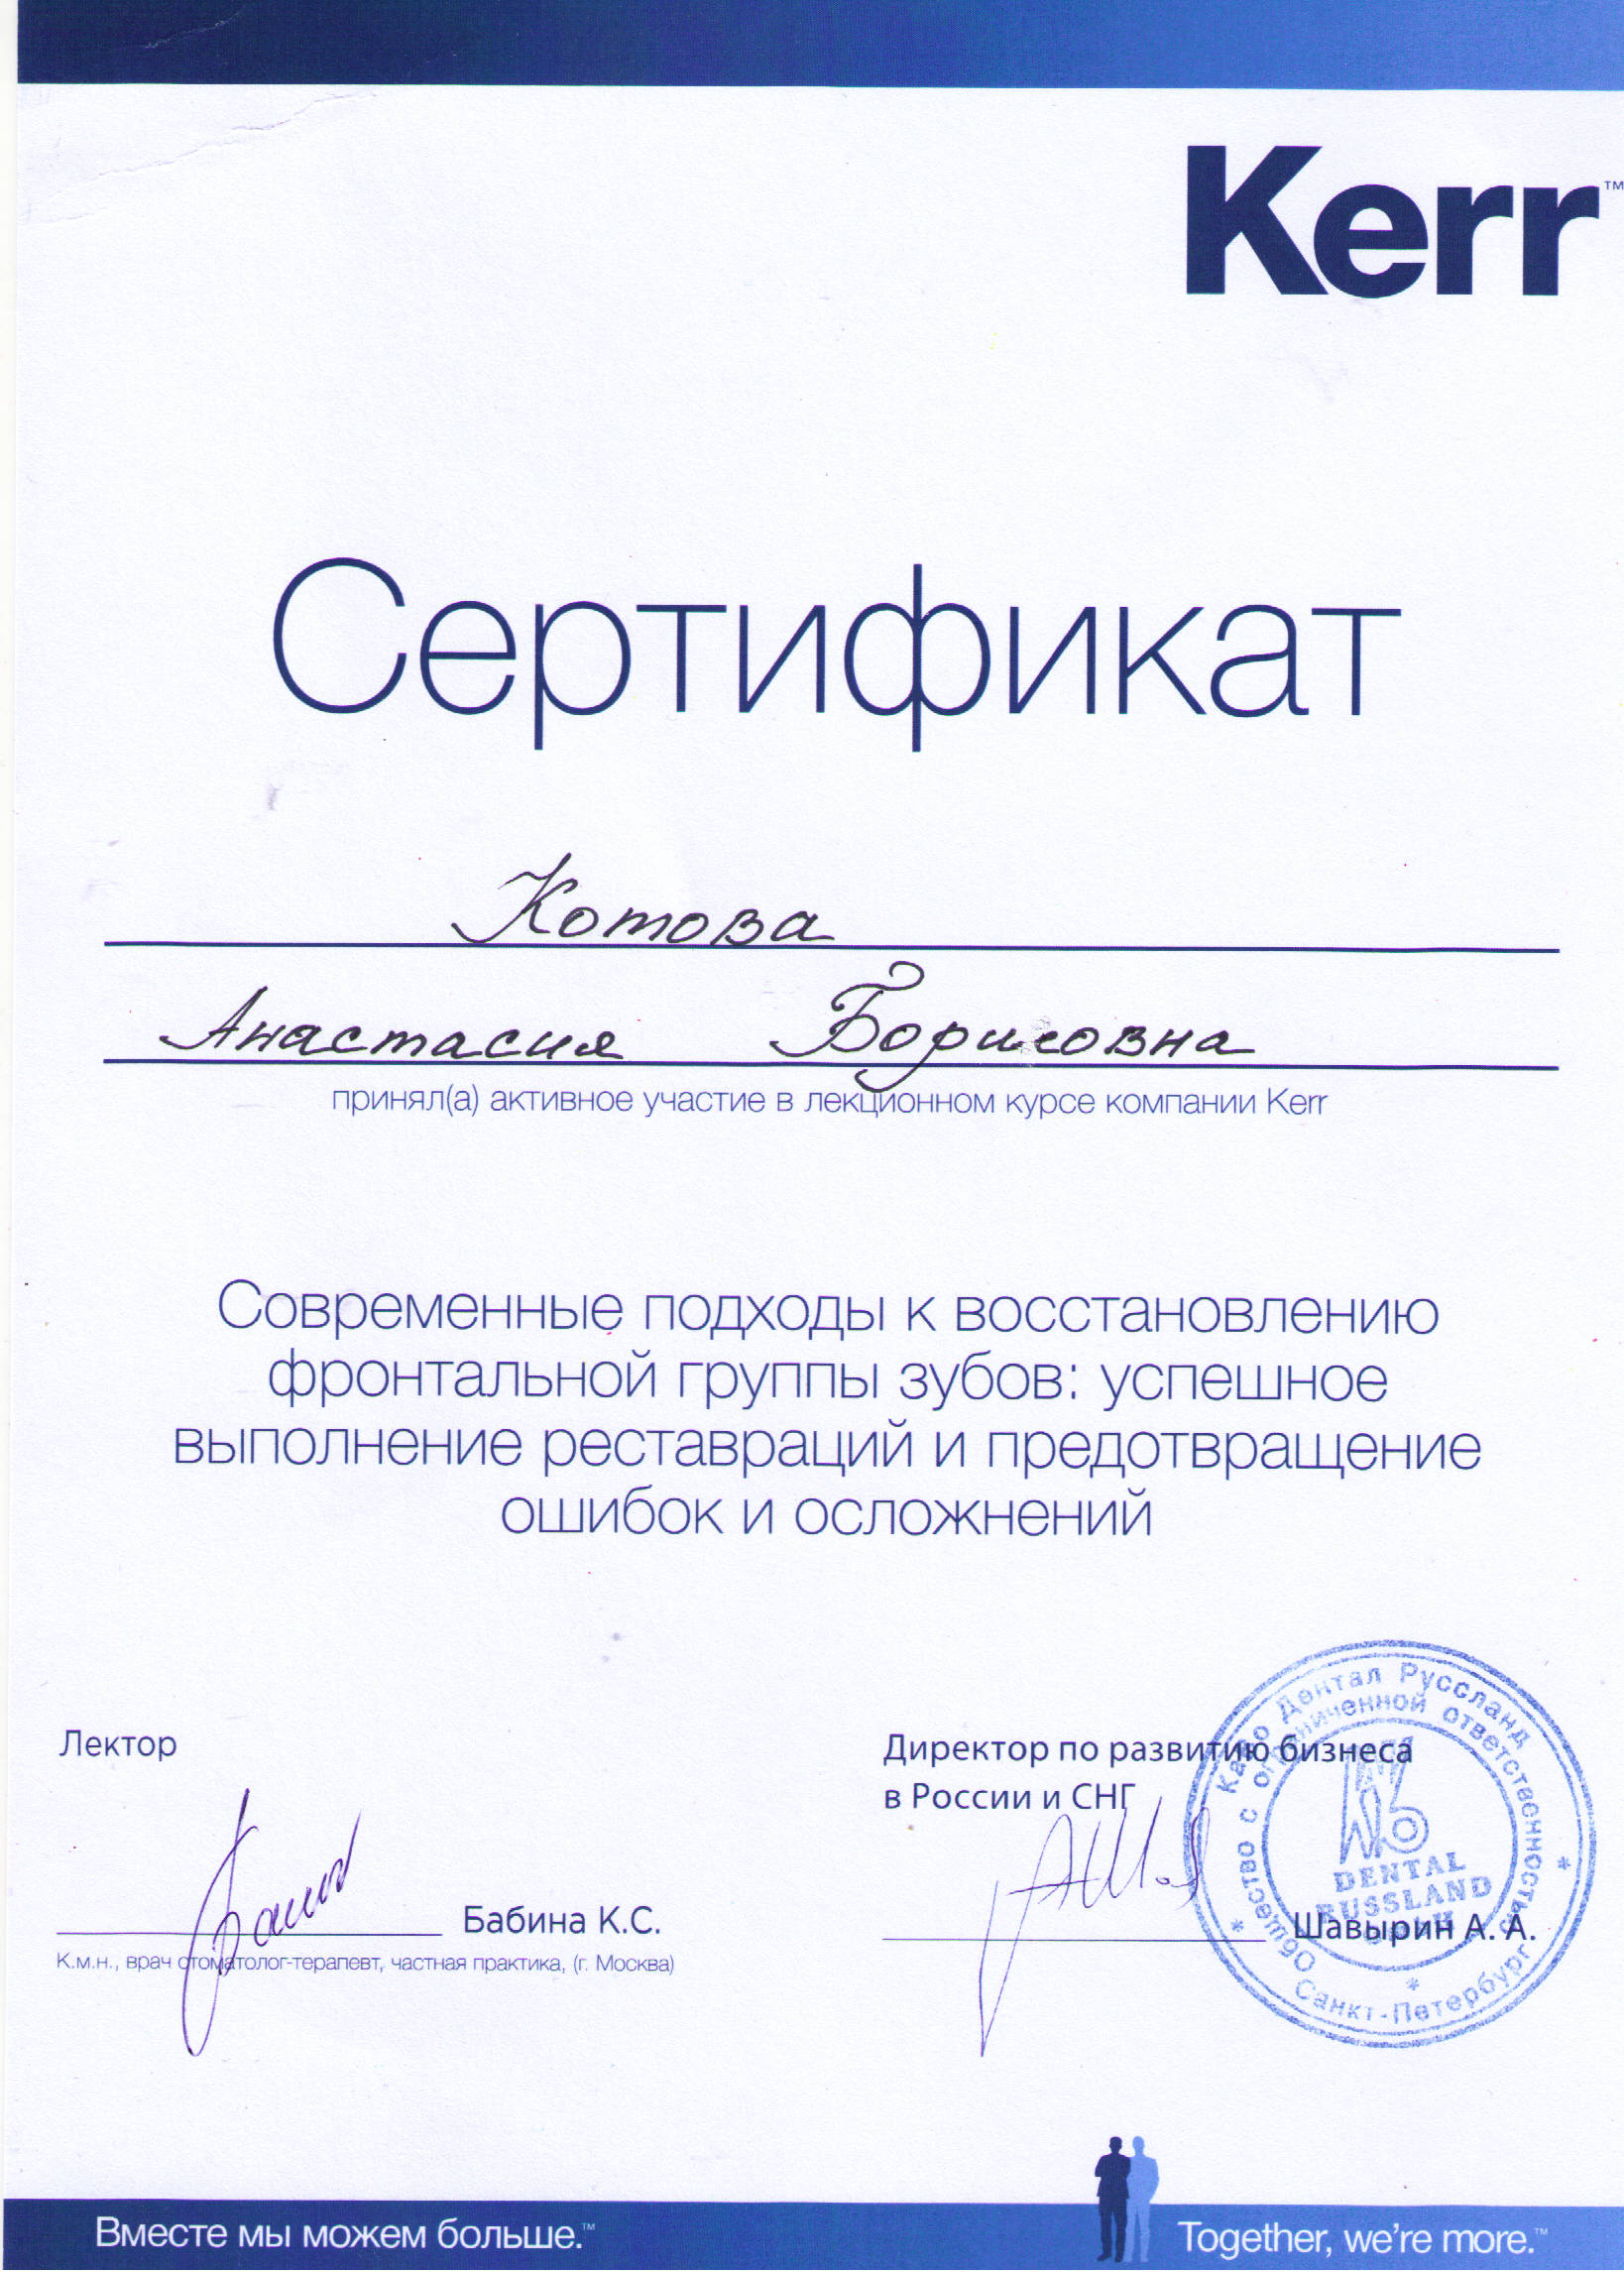 -сертификат